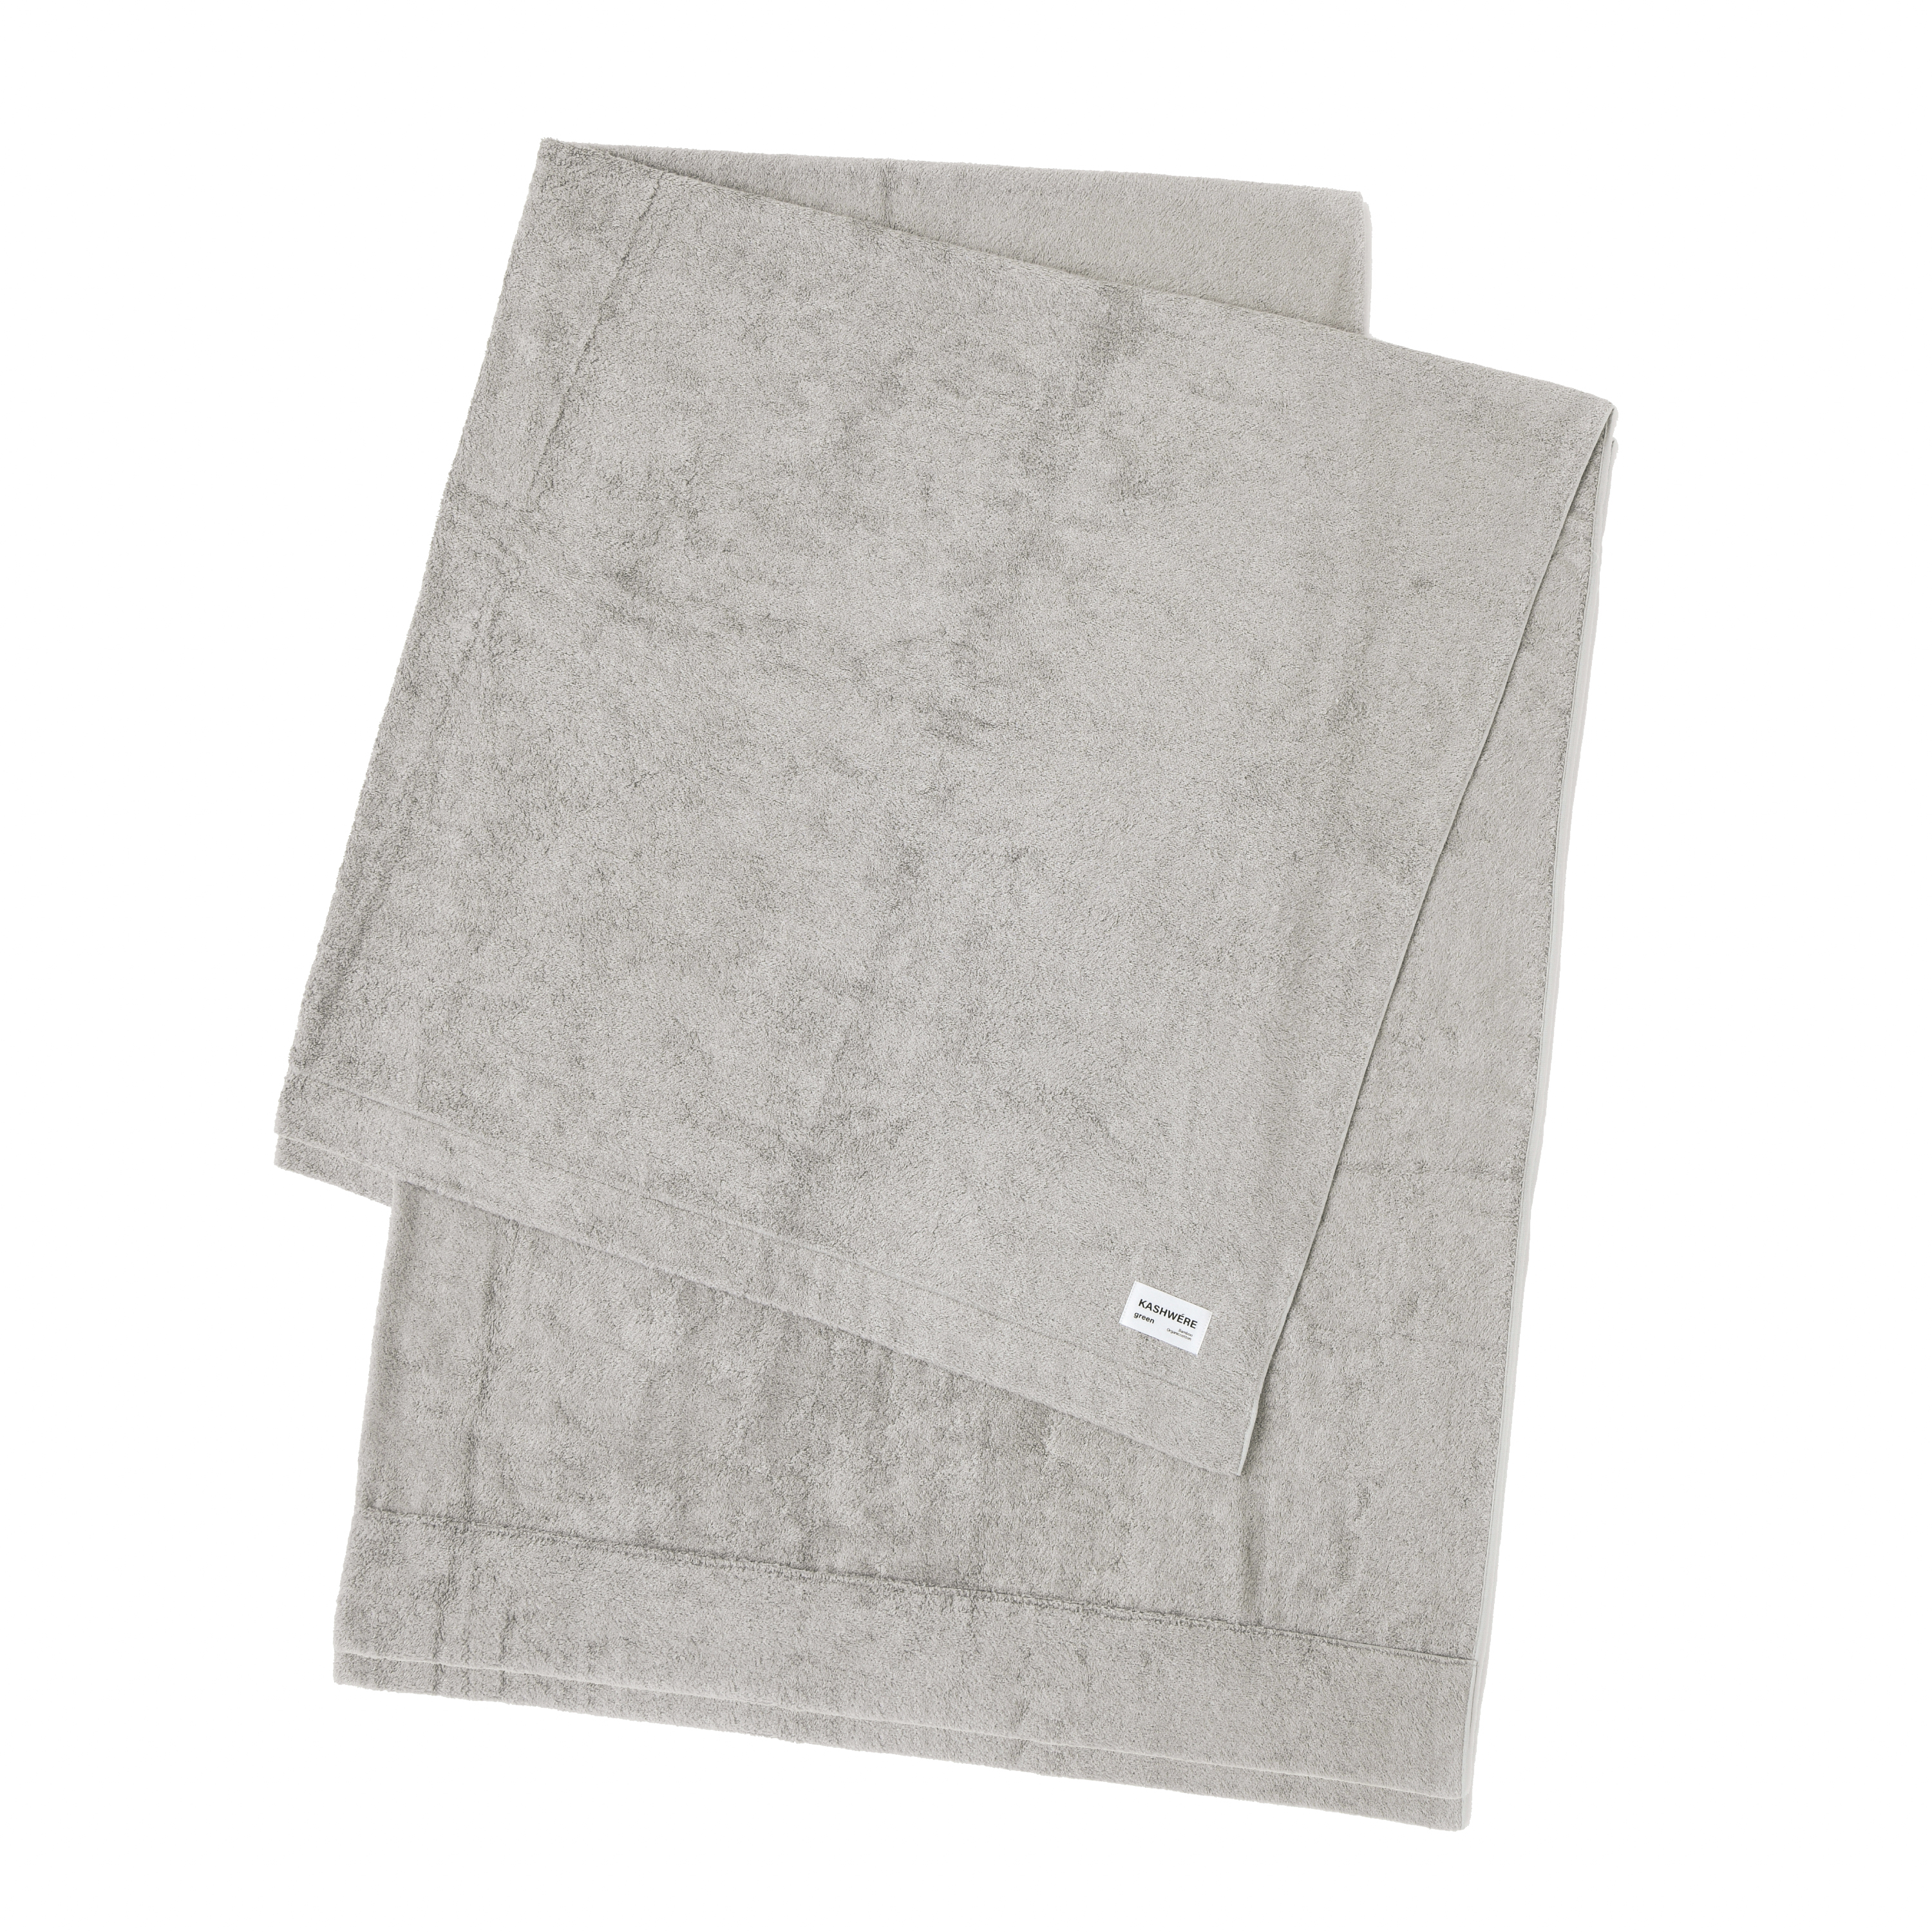 DOUBLE BLANKET / HARE(225×190cm foggy): TOWEL | kashwere Japan